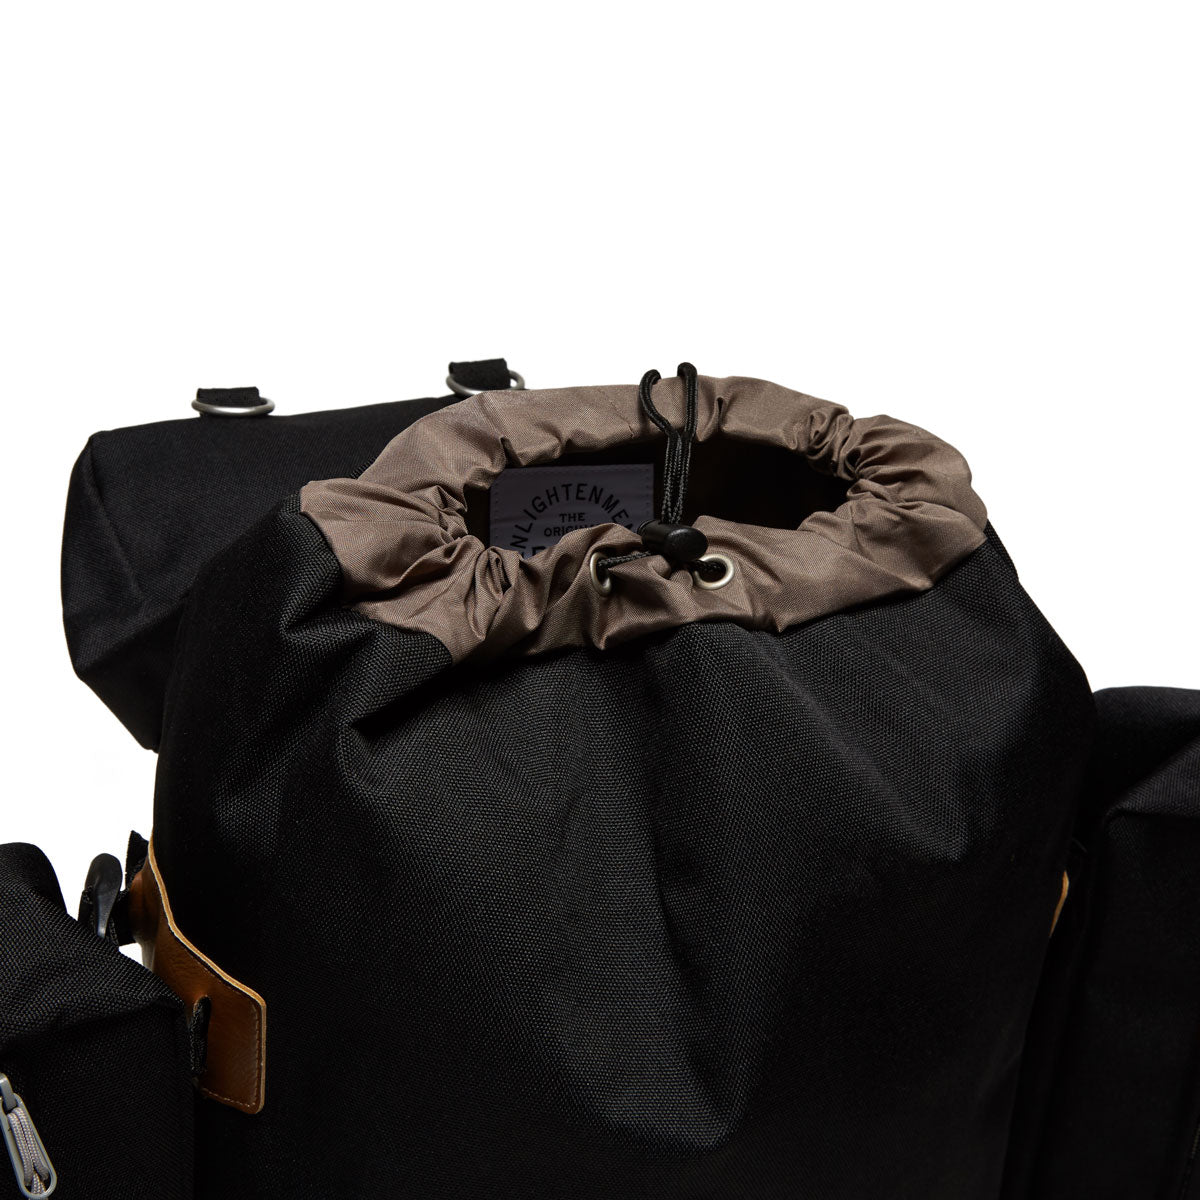 Poler Classic Rucksack Backpack - Black image 5